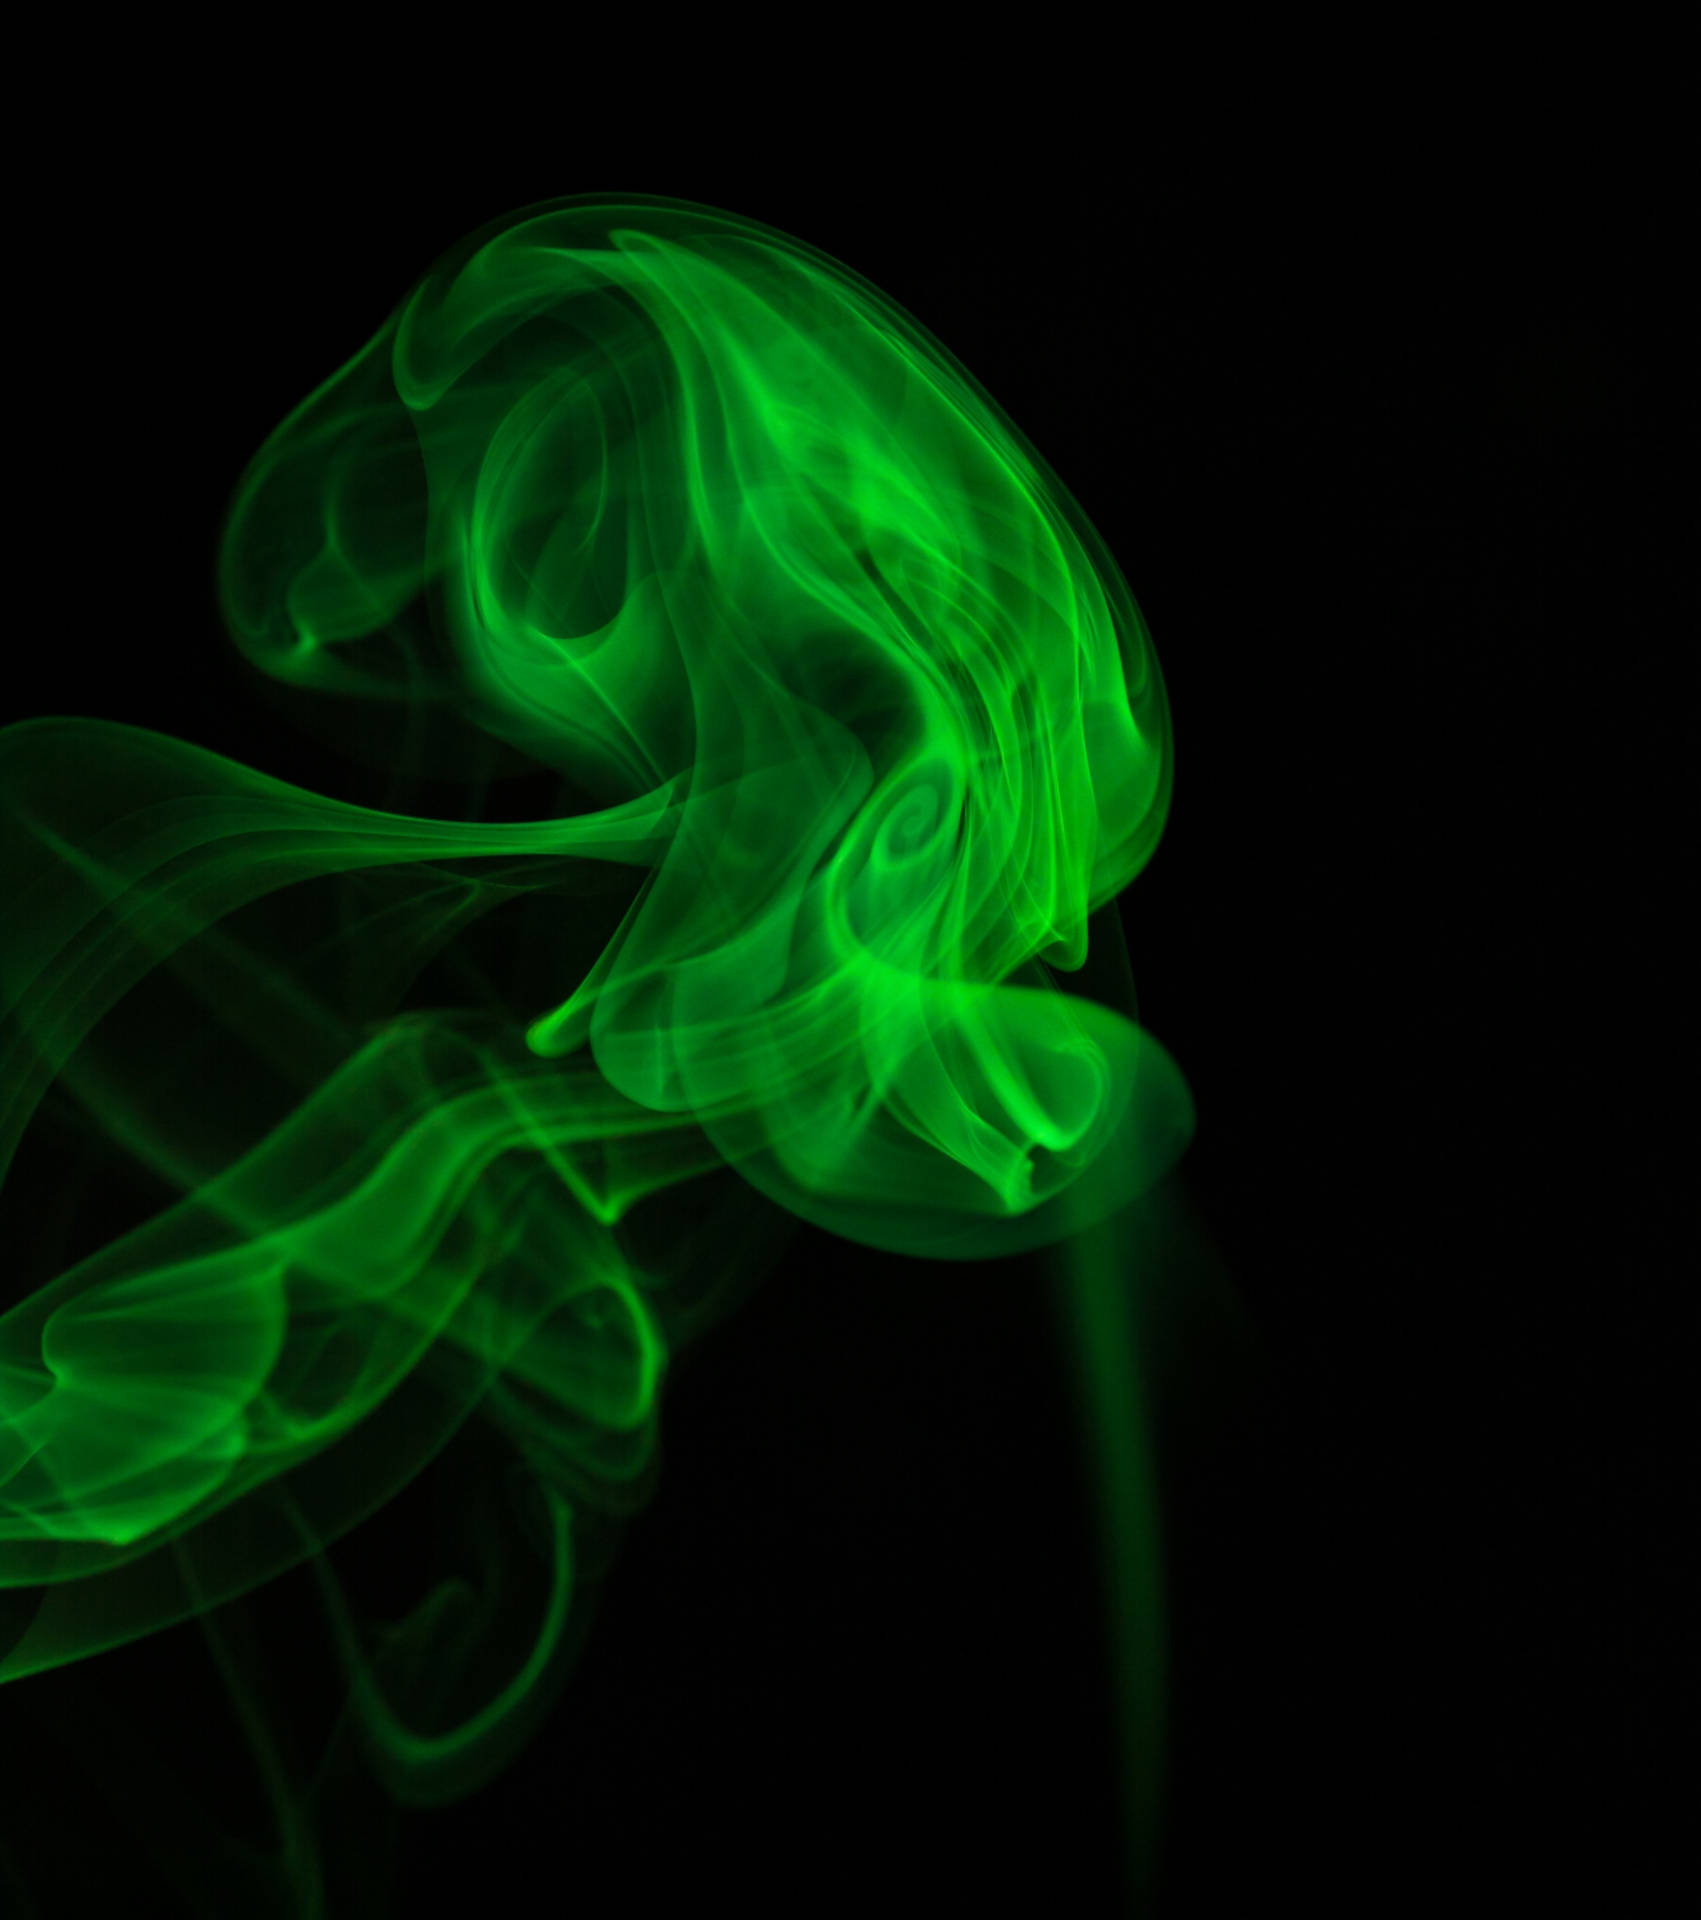 Swirling Green Smoke Wallpaper